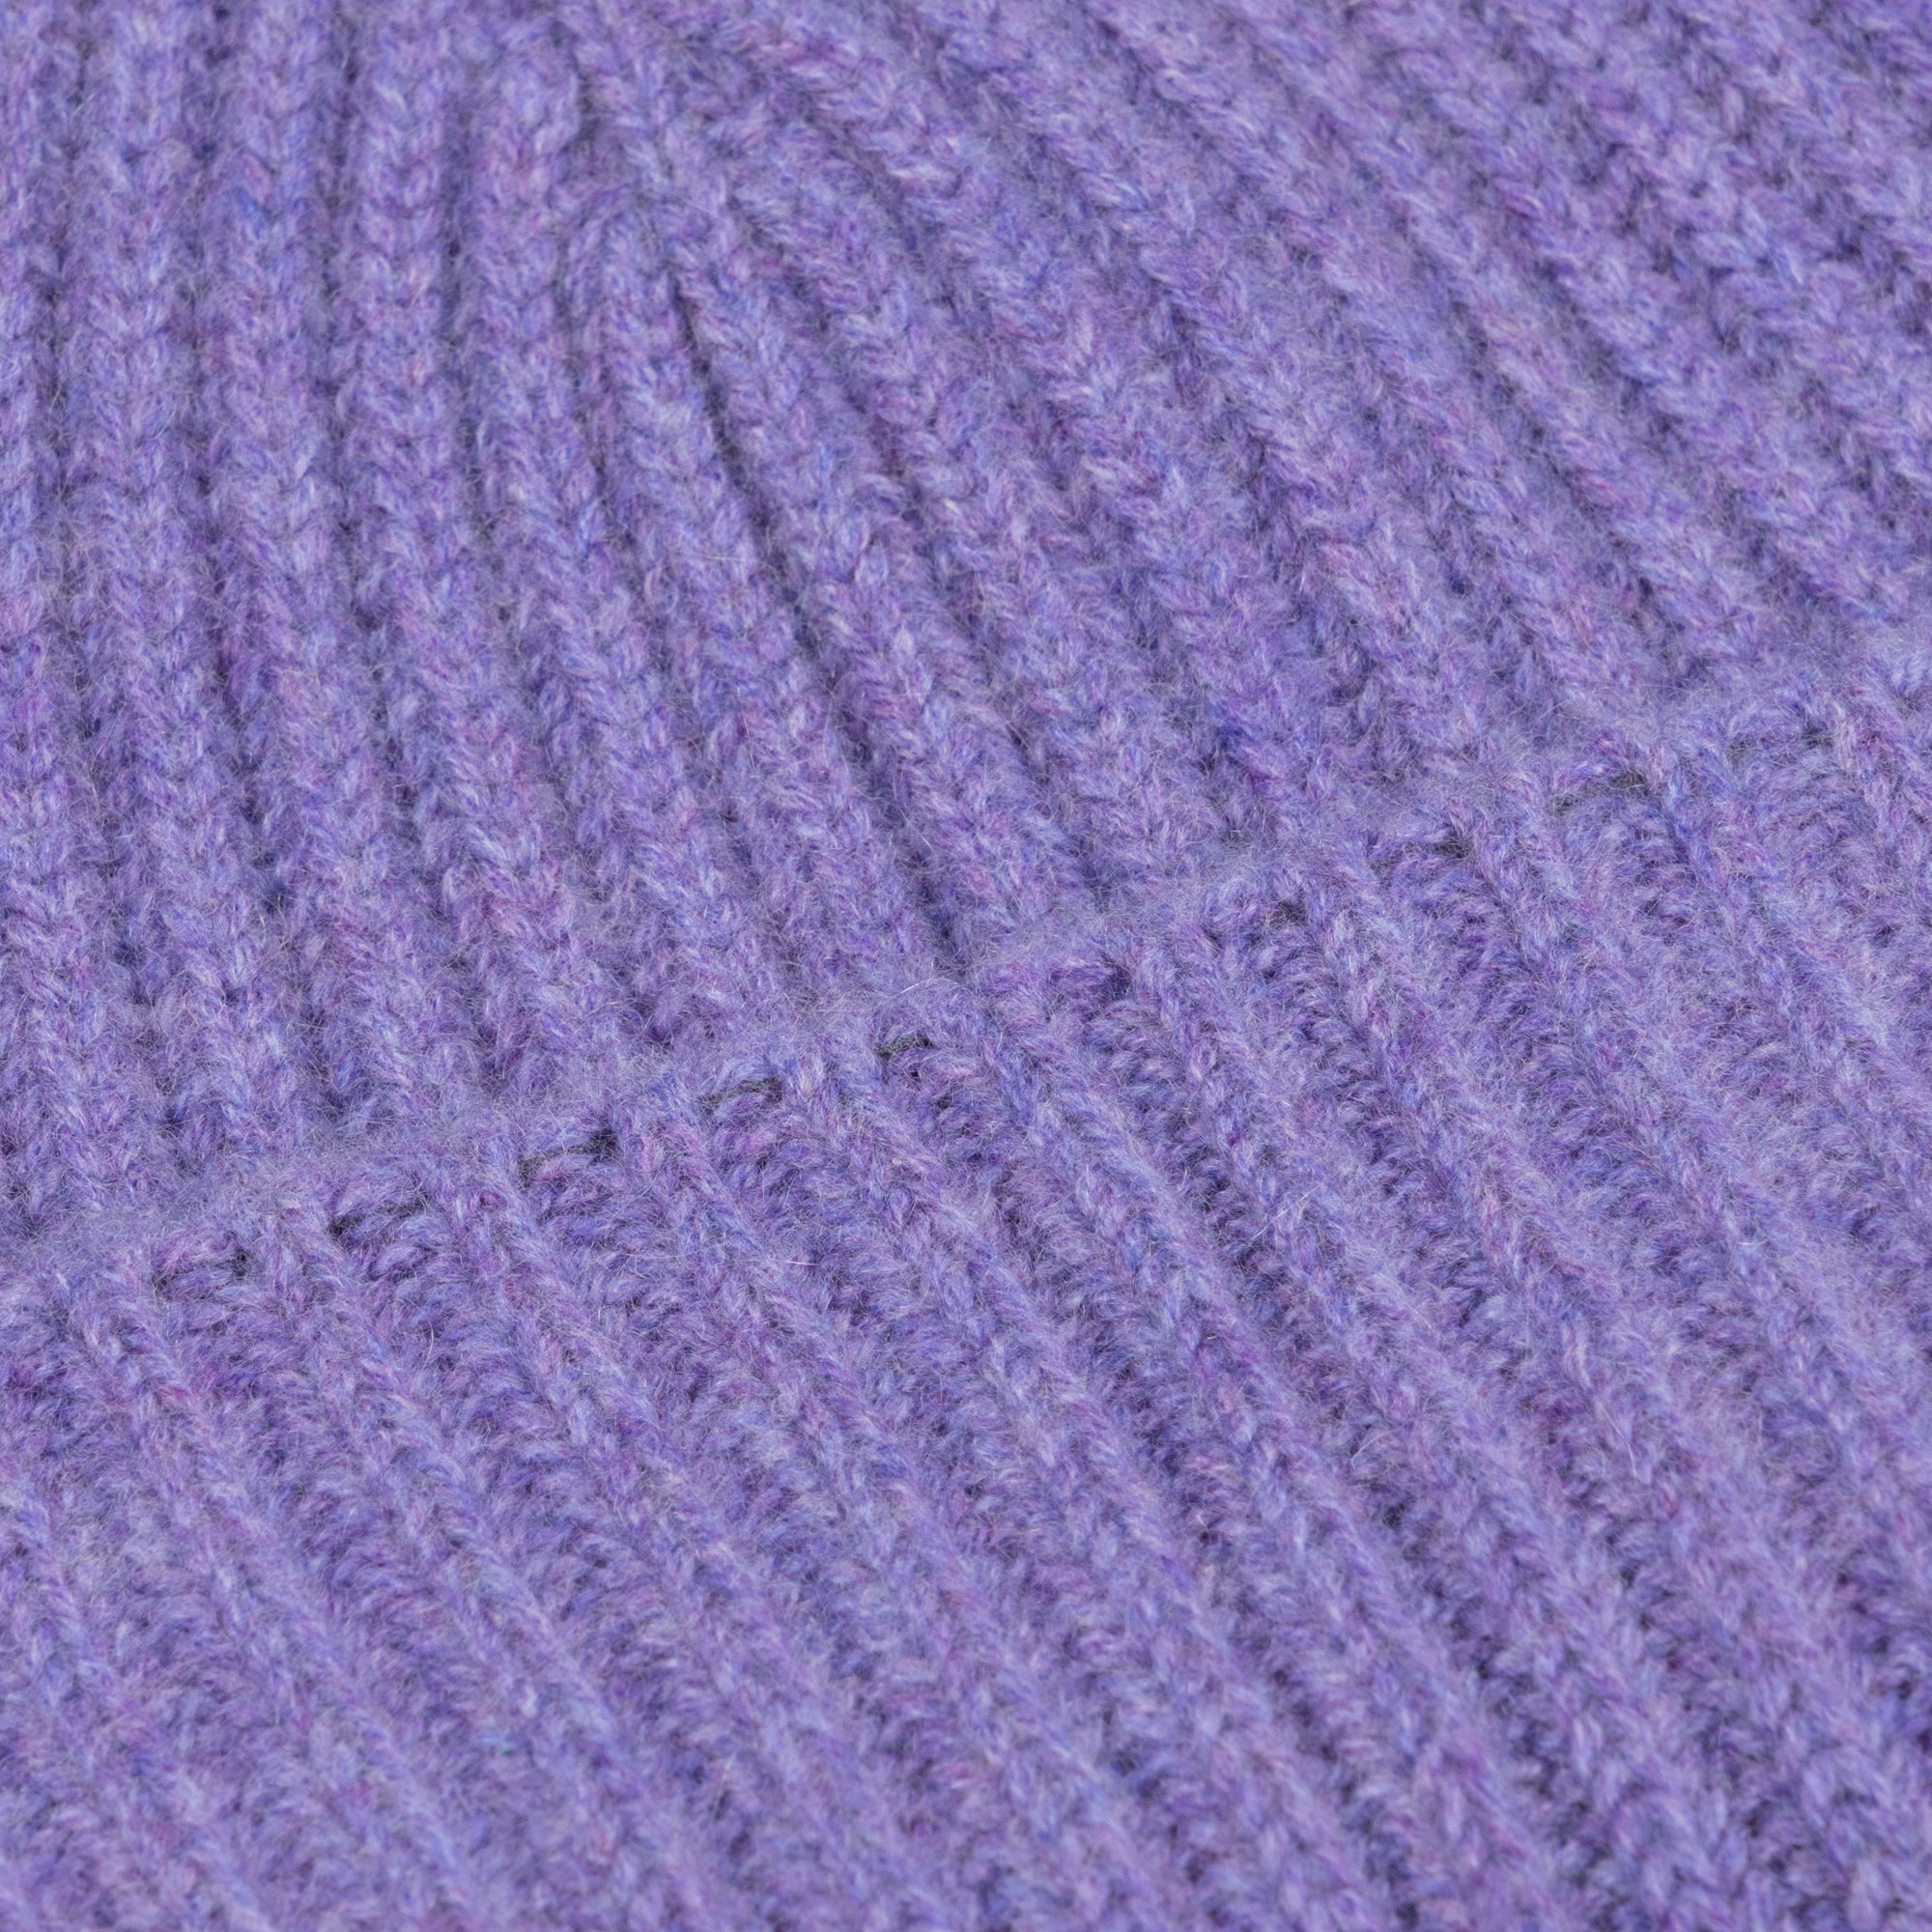 Purple Cashmere Hat